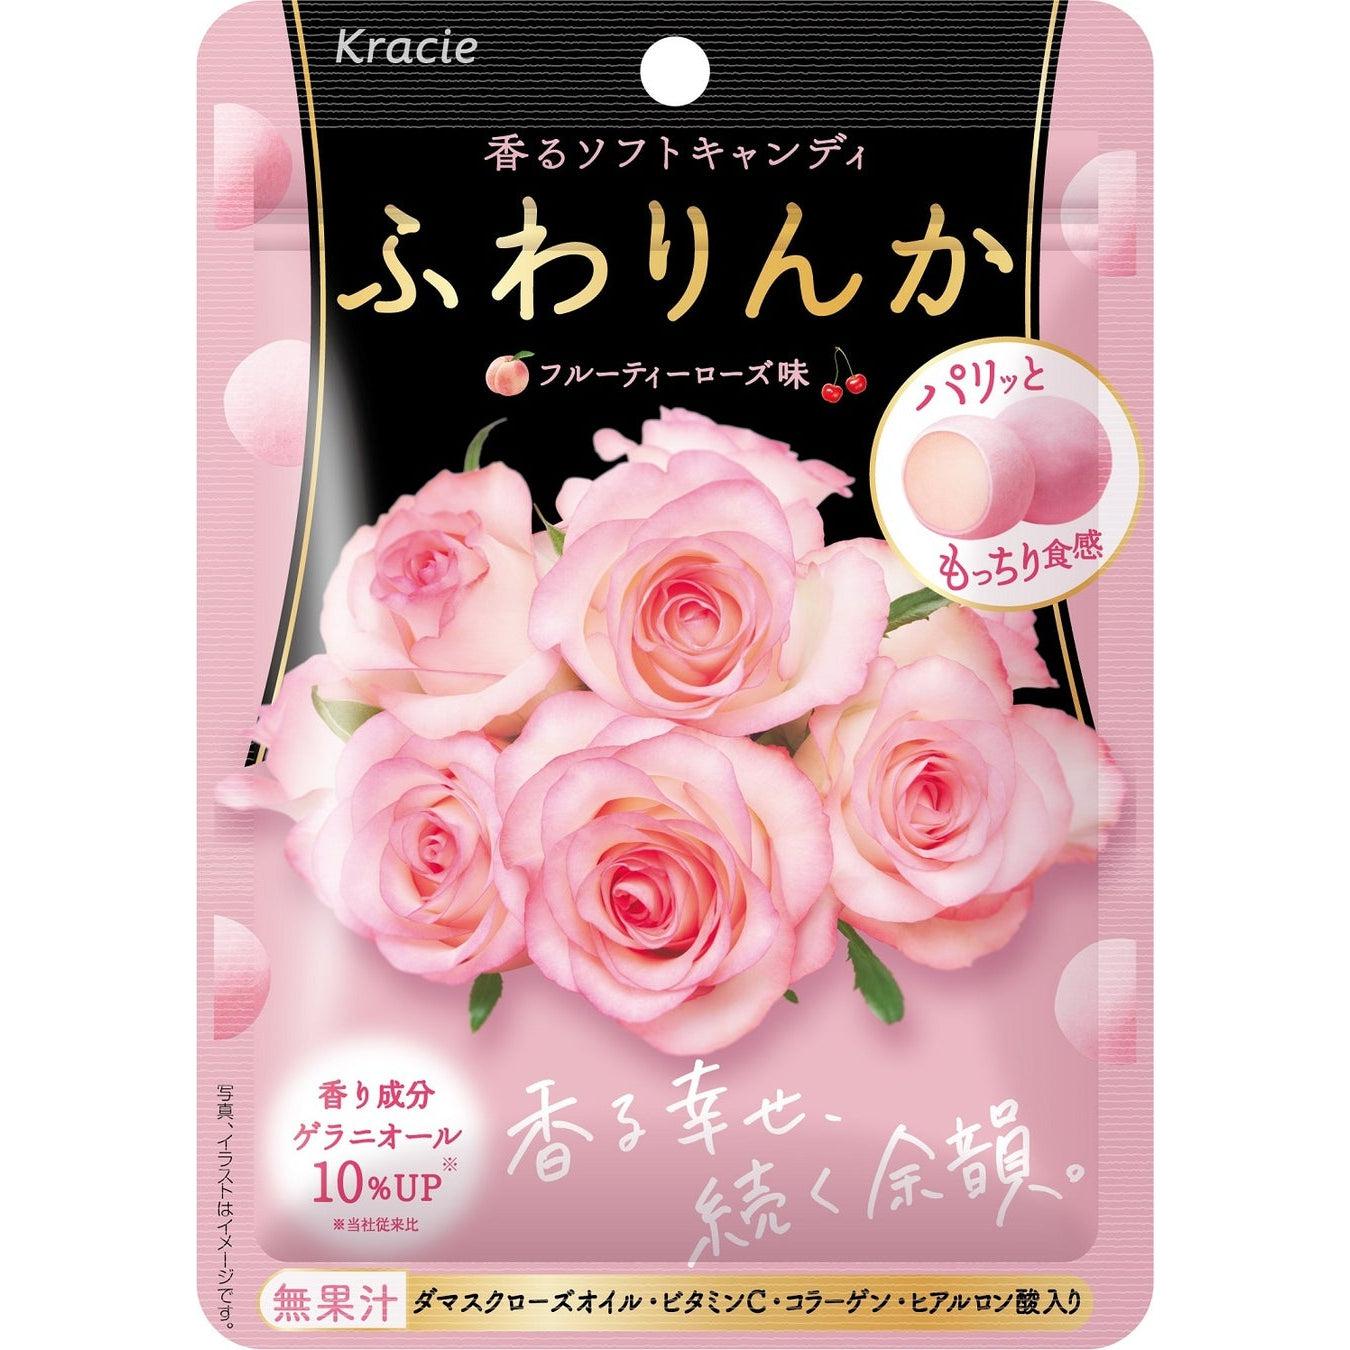 Kracie Fuwarinka Beauty Soft Candy Fruity Rose Flavor (Pack of 10)